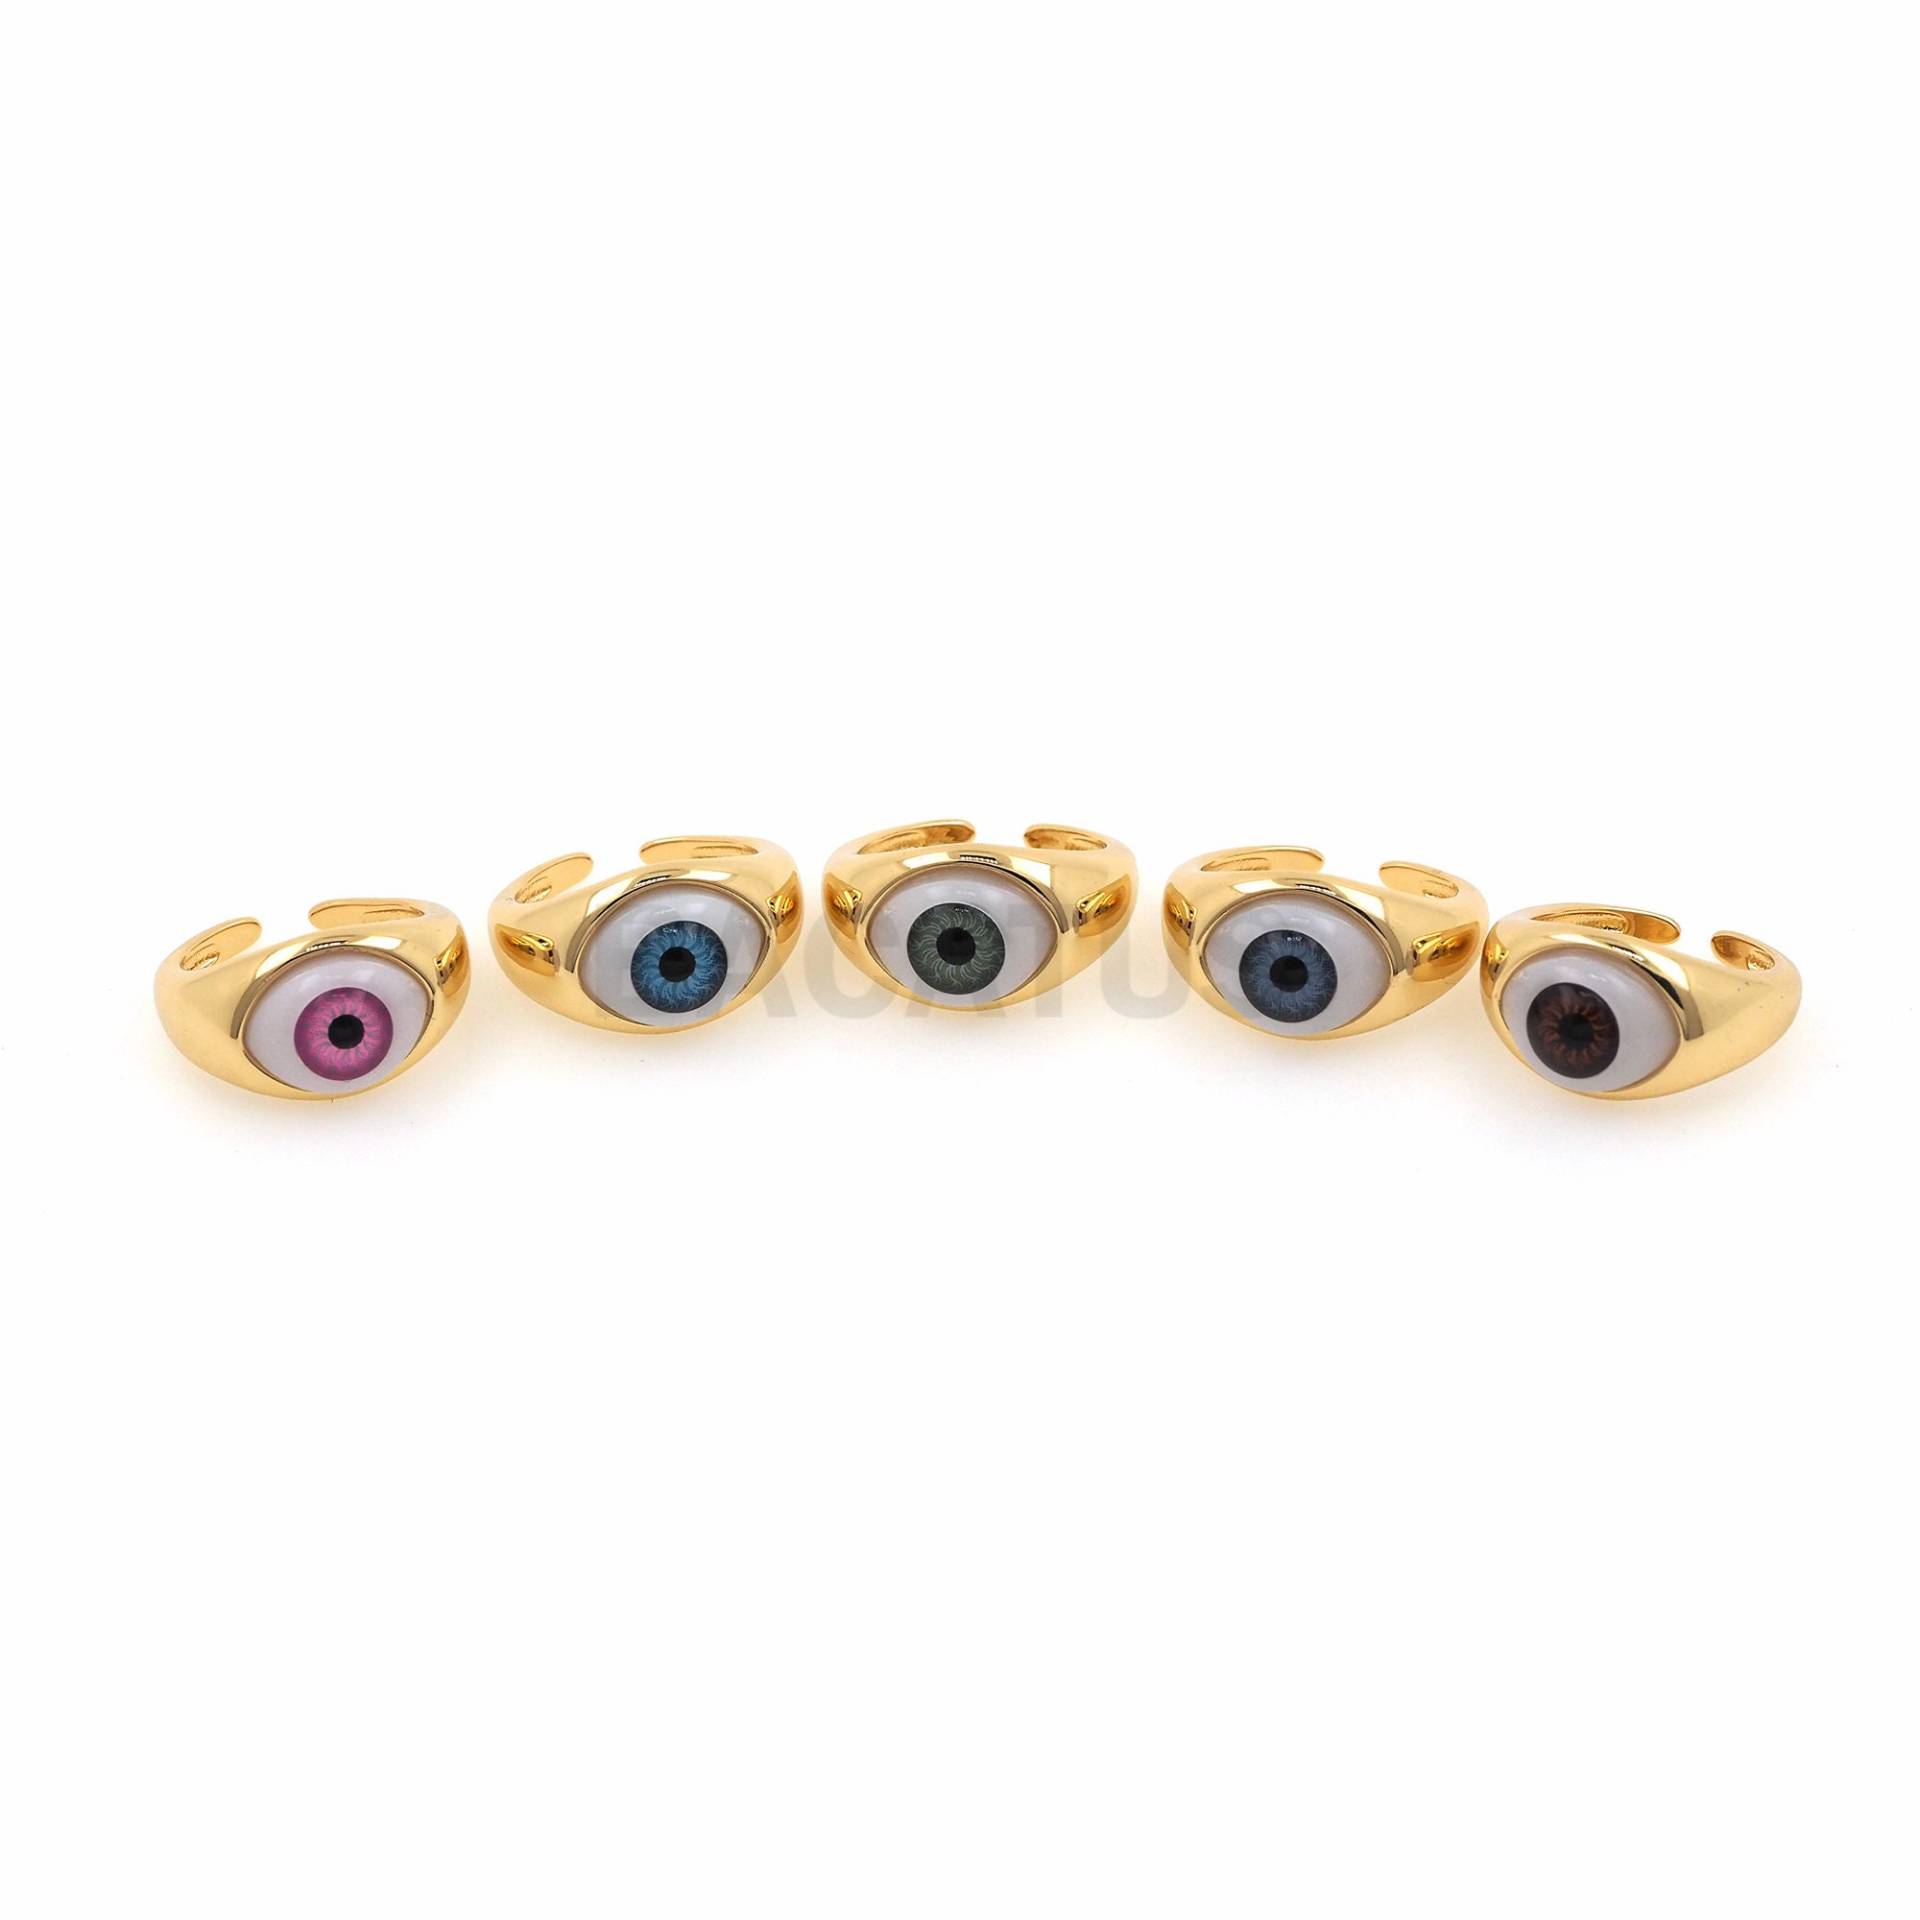 18K Gold Filled Augenring, Enamel Charm, Verstellbarer Ring, Goldener Offener Dicker Ring von BACATUSCR